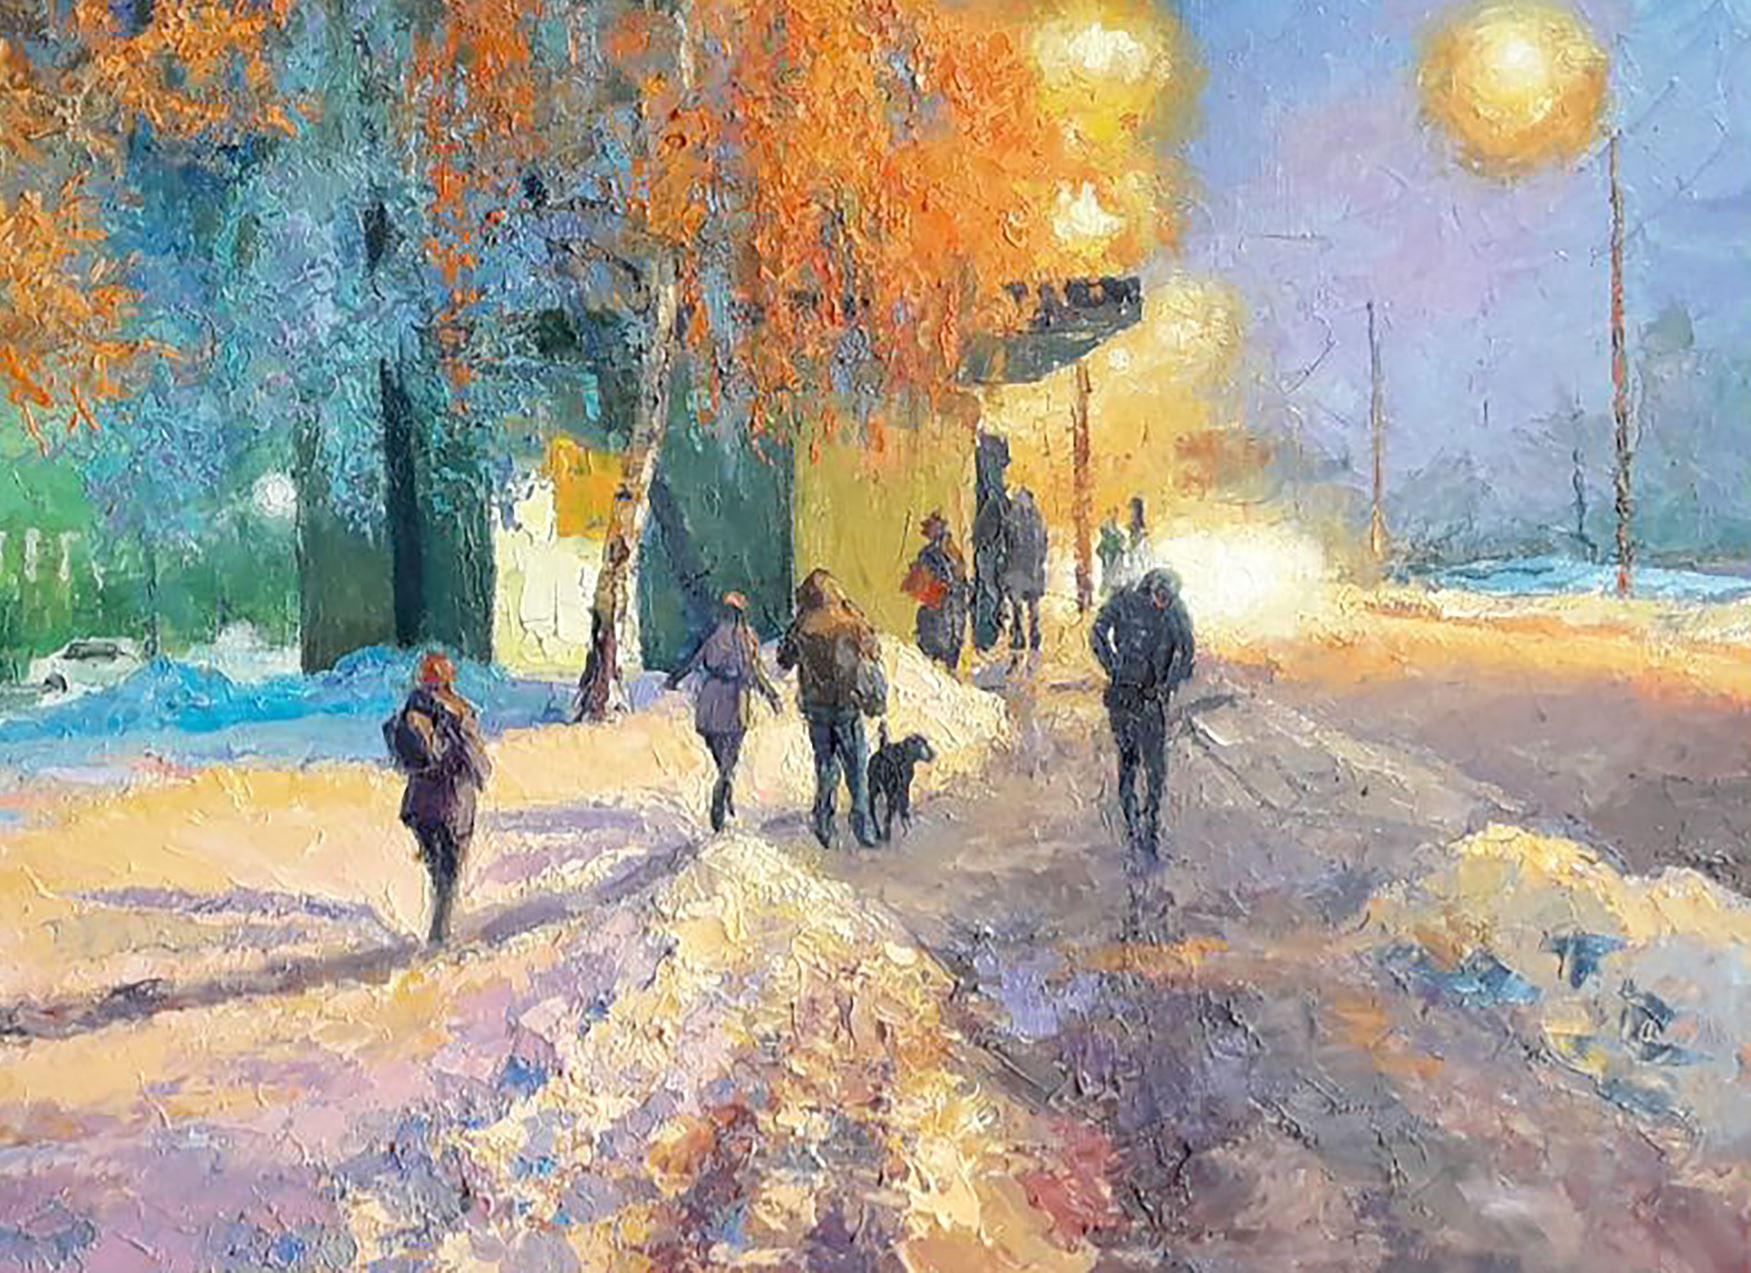 Artist: Boris Serdyuk 
Work: Original oil painting, handmade artwork, one of a kind 
Medium: Oil on Canvas
Style: Impressionism
Year: 2020
Title: Evening City
Size: 27.5